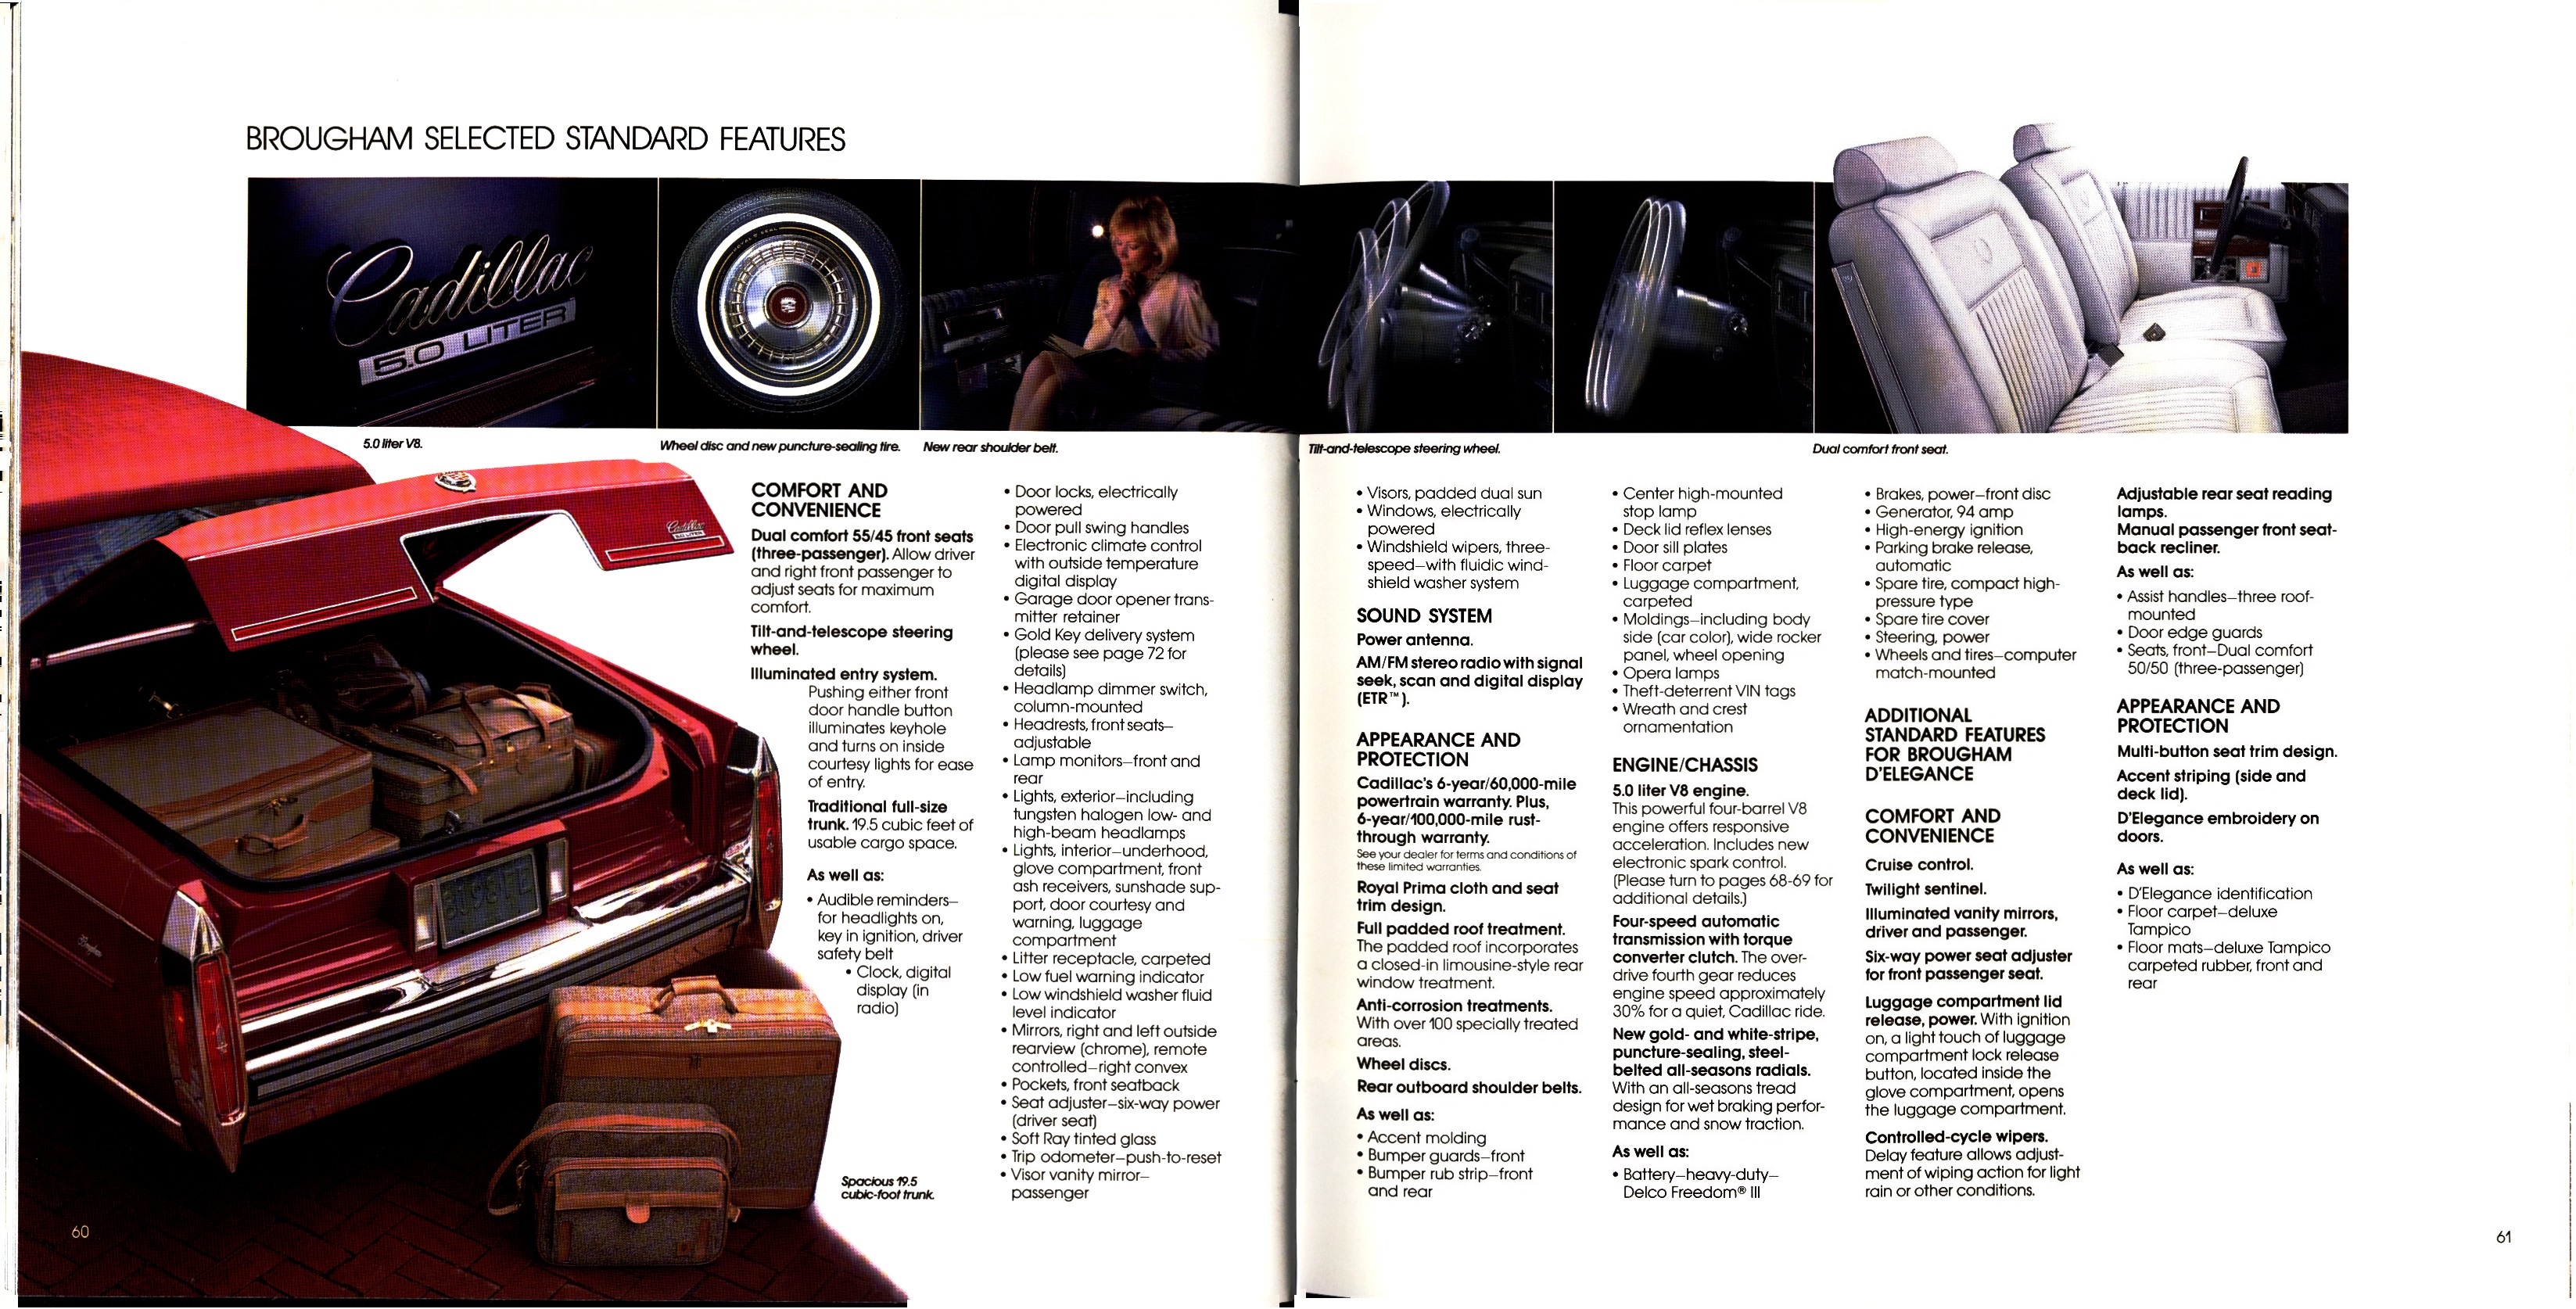 1988 Cadillac Full Line Prestige Brochure 60-61